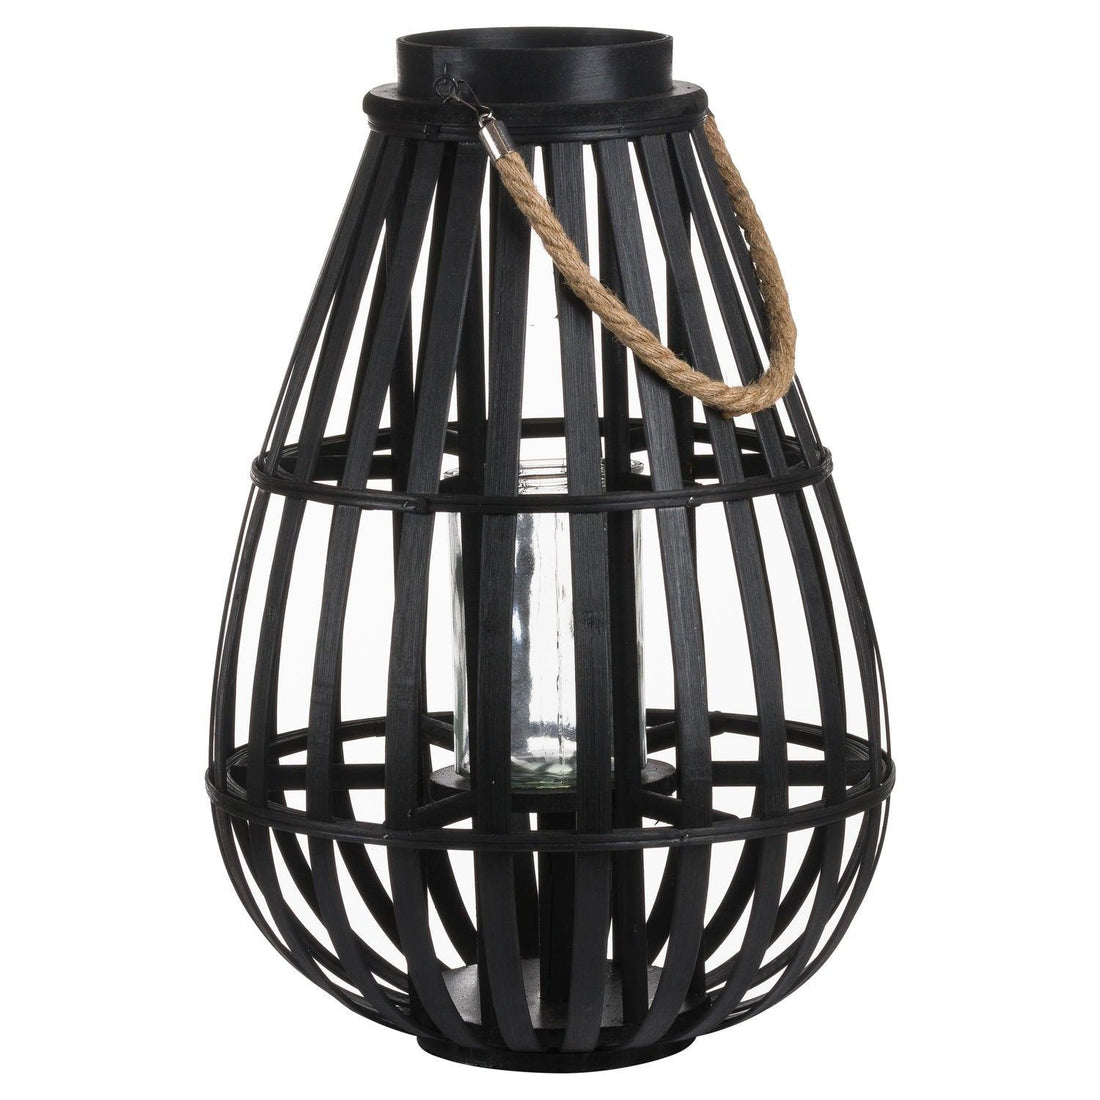 Domed Wicker Lantern With Rope Detail - £54.95 - Lighting > Lanterns 